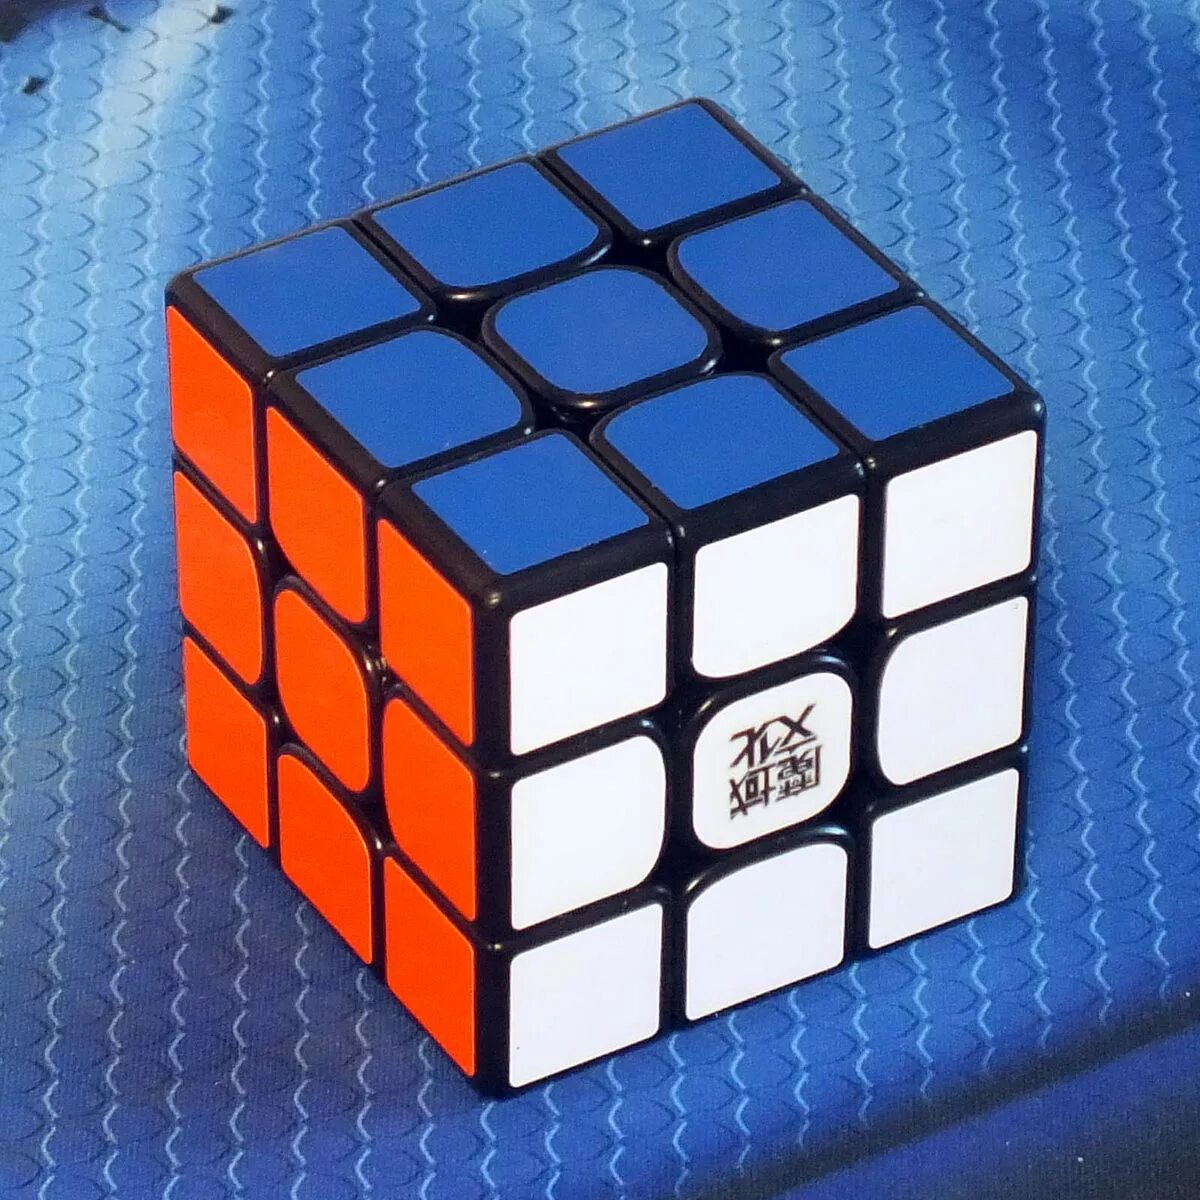 Крестики нолики глупые. MOYU Weilong GTS v2 m. Weilong GTS v2 Magnetic. Кубик Рубика крестики нолики. Кубики рубики крестики нолики.